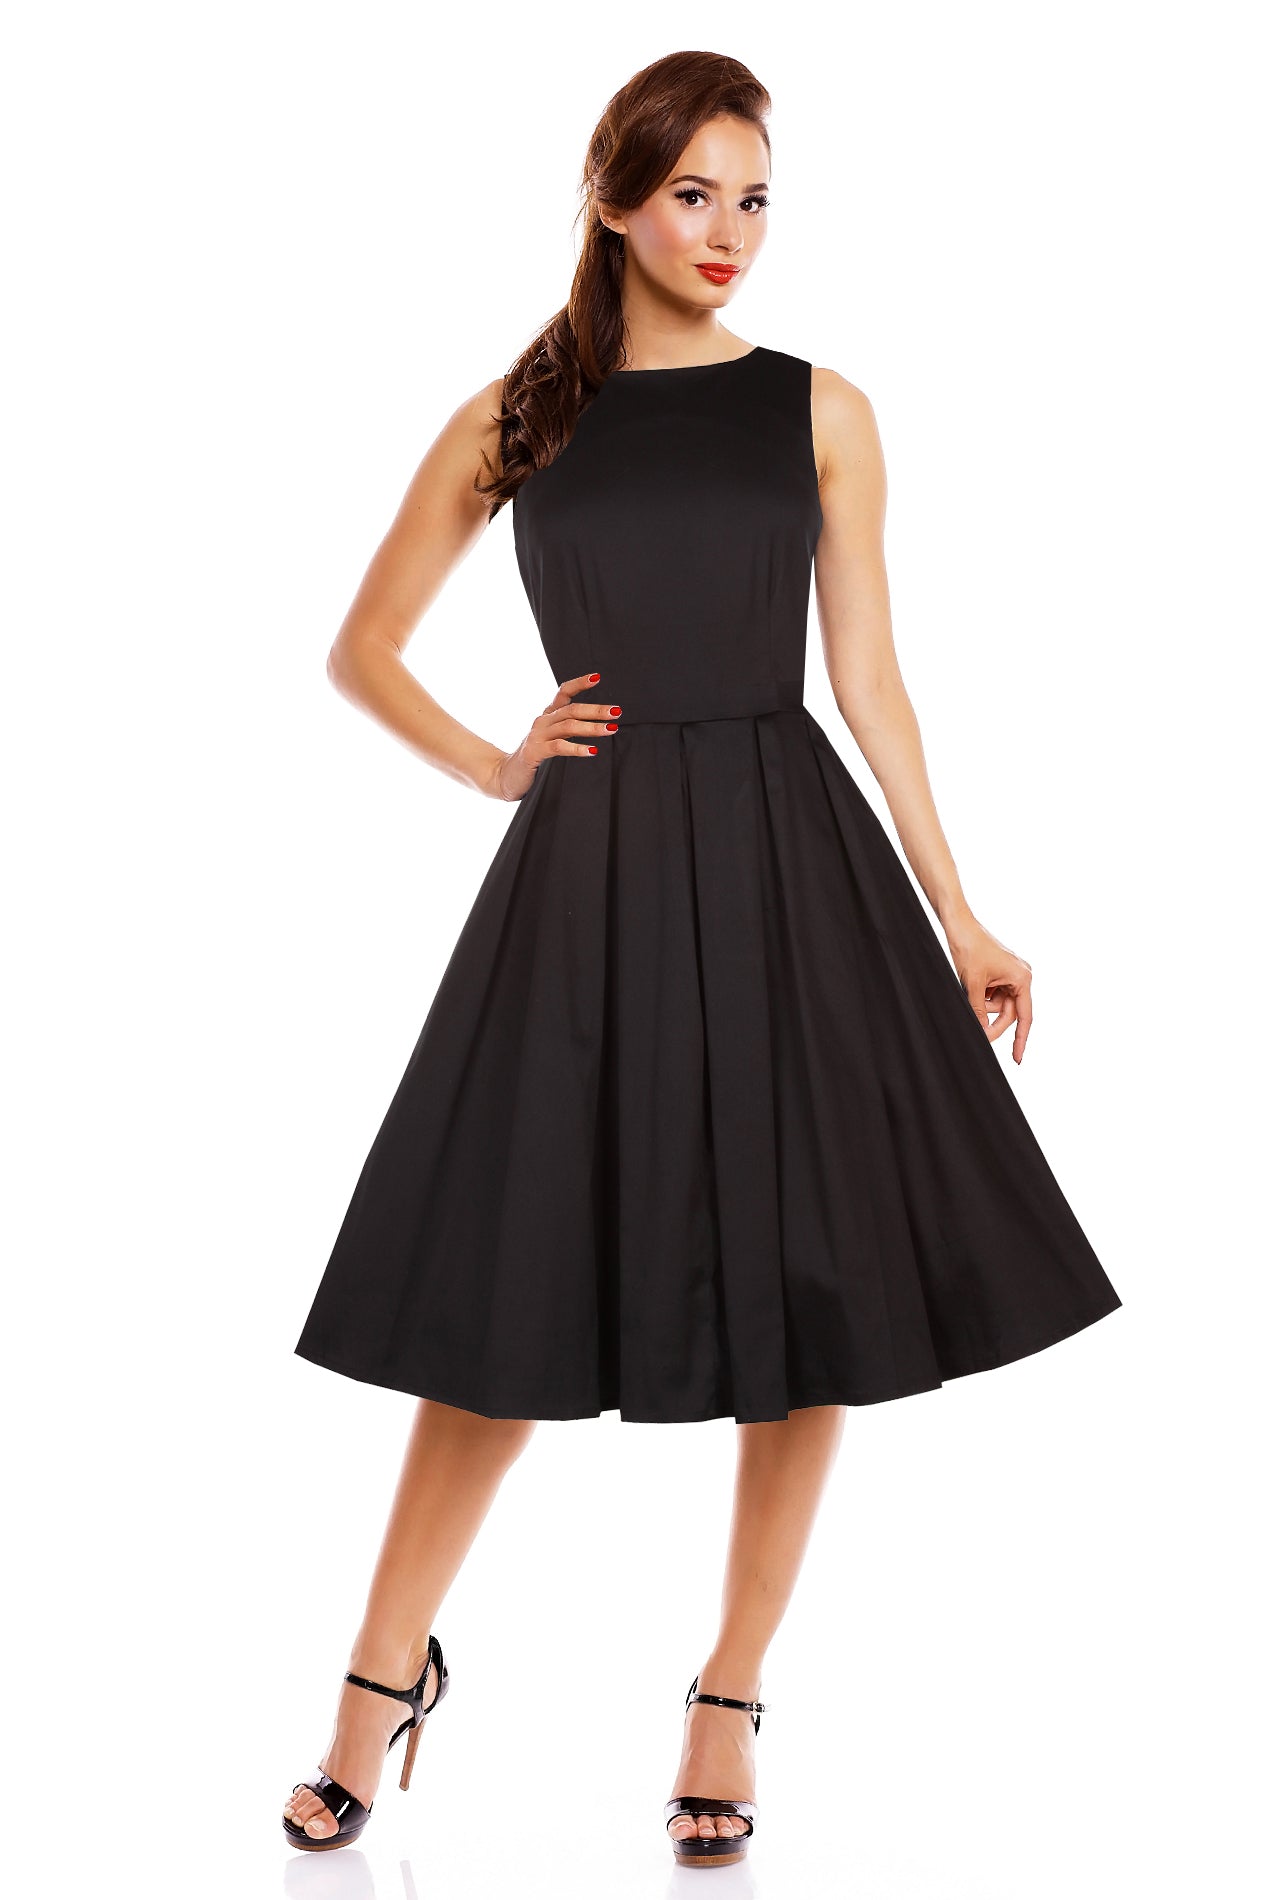 Stylish 50's Retro Swing Dress With Pockets in Plain Black